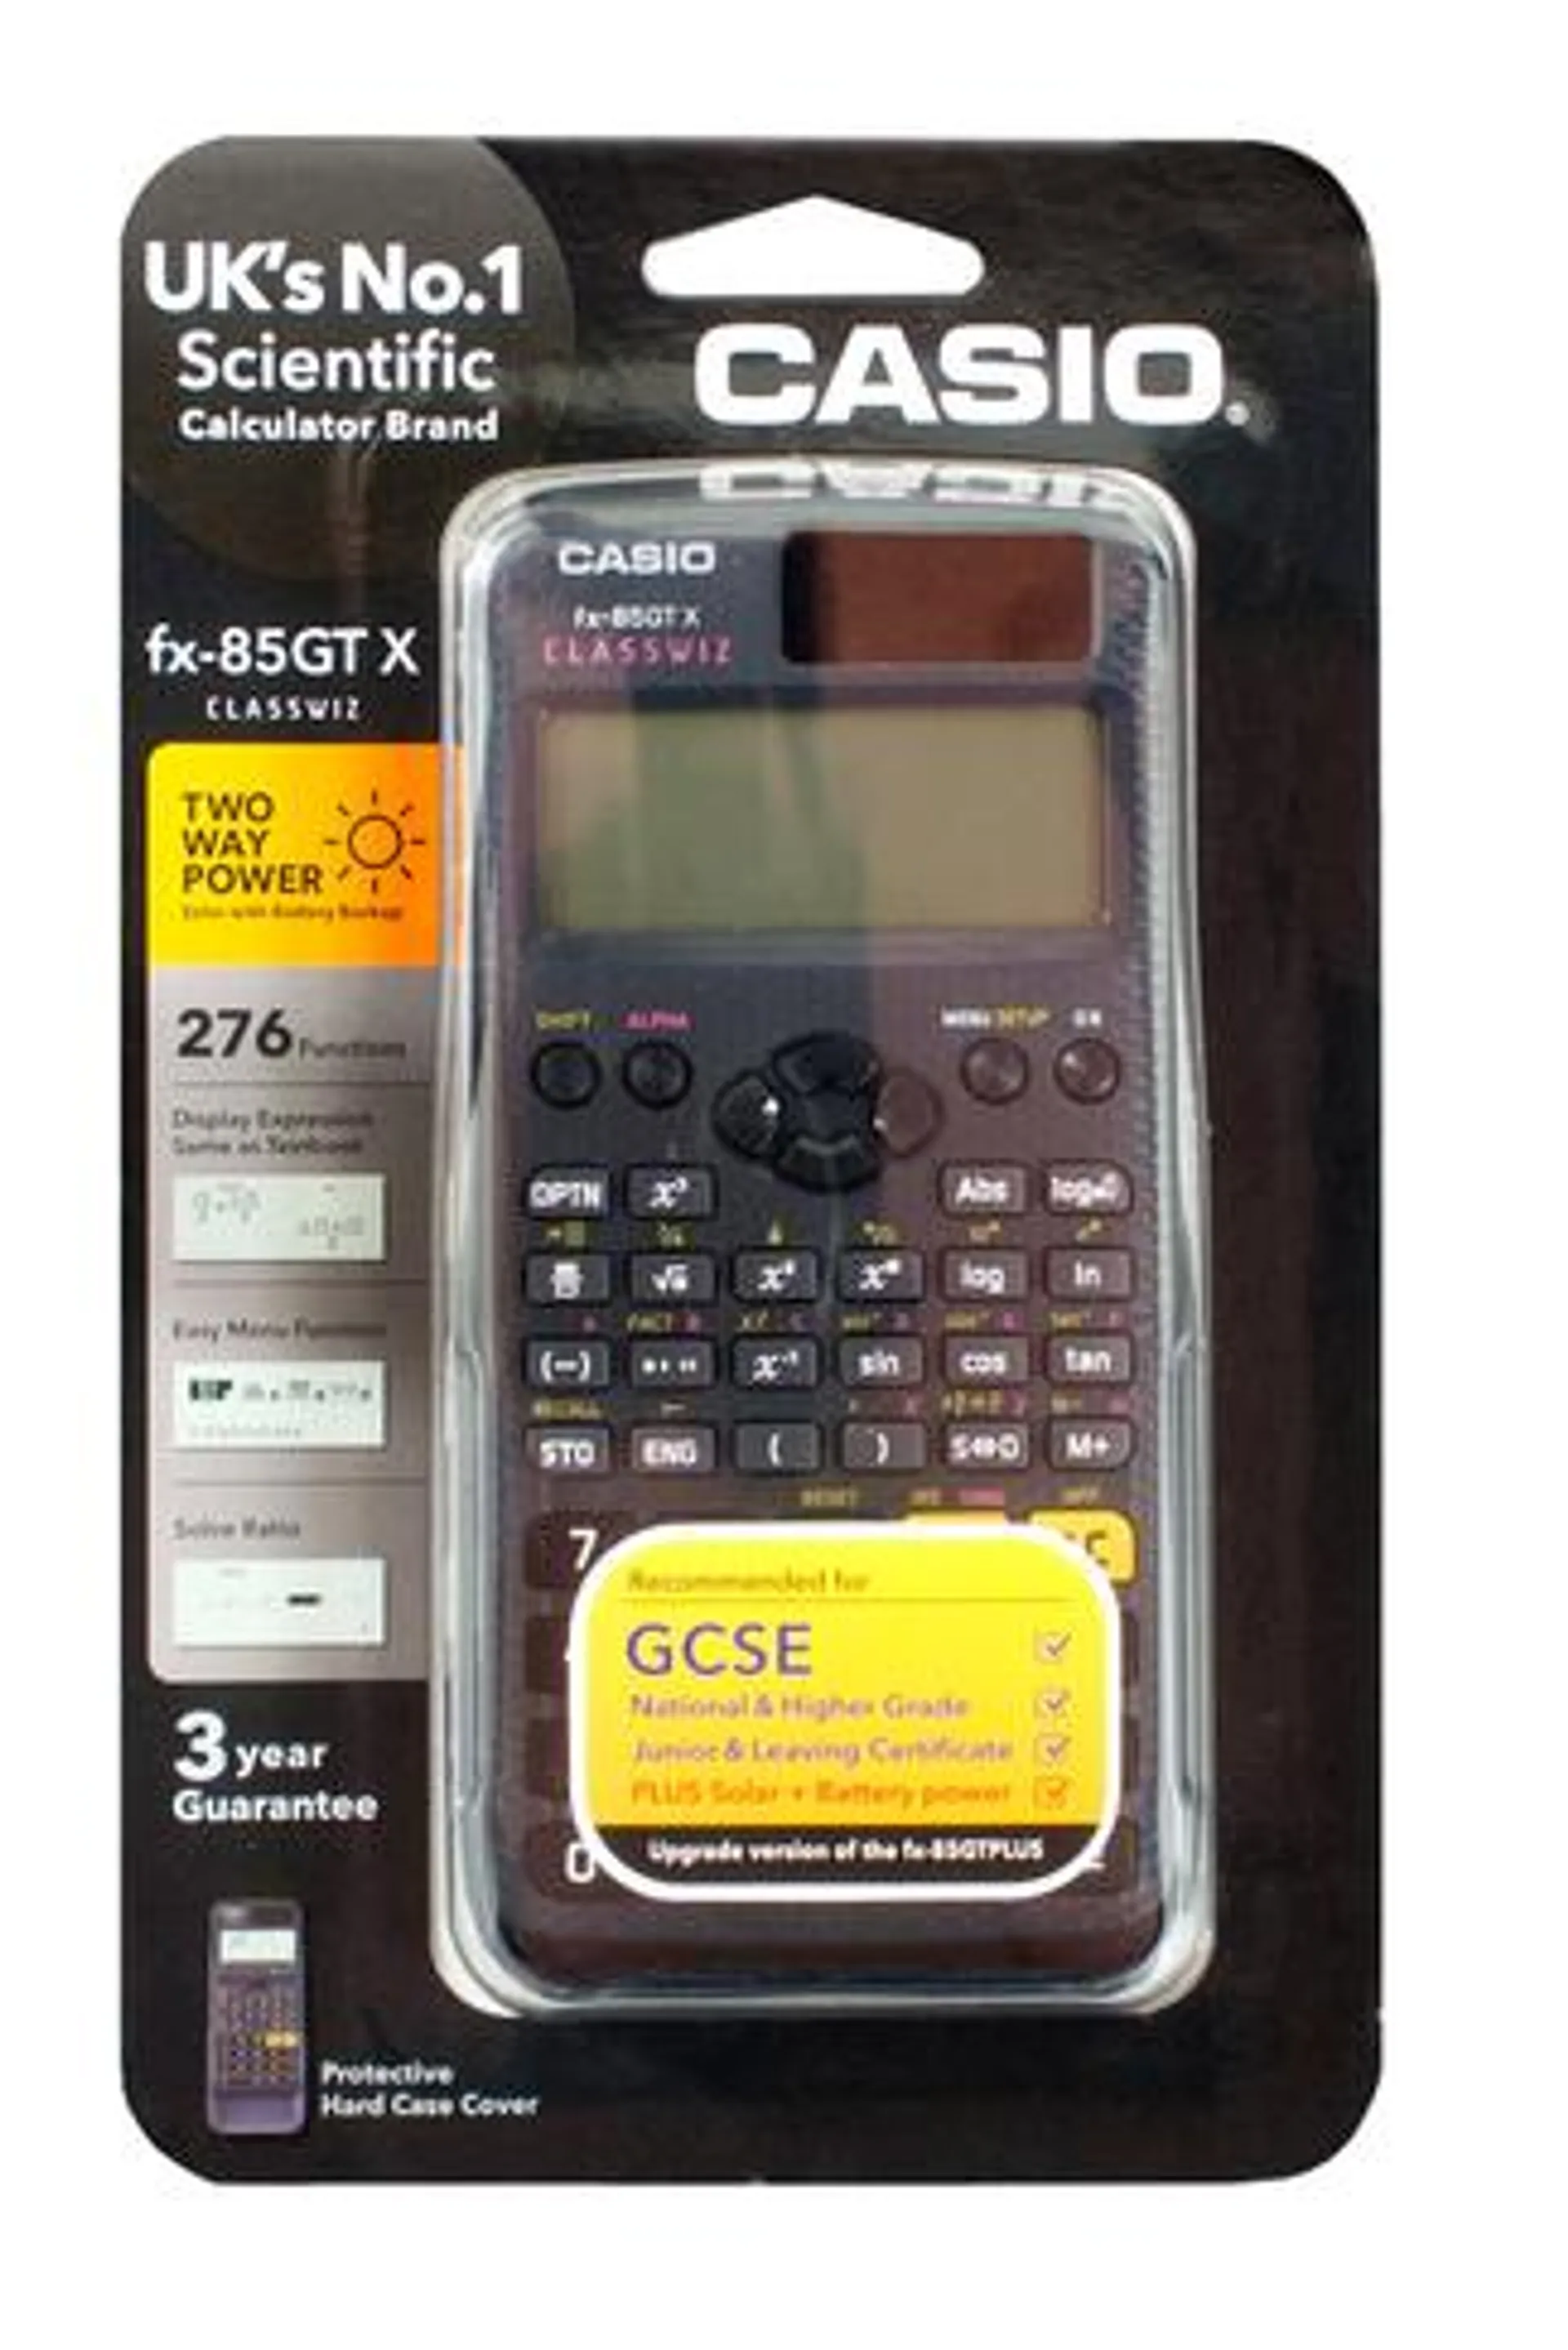 CASIO FX-85GTX Black Scientific Calculator